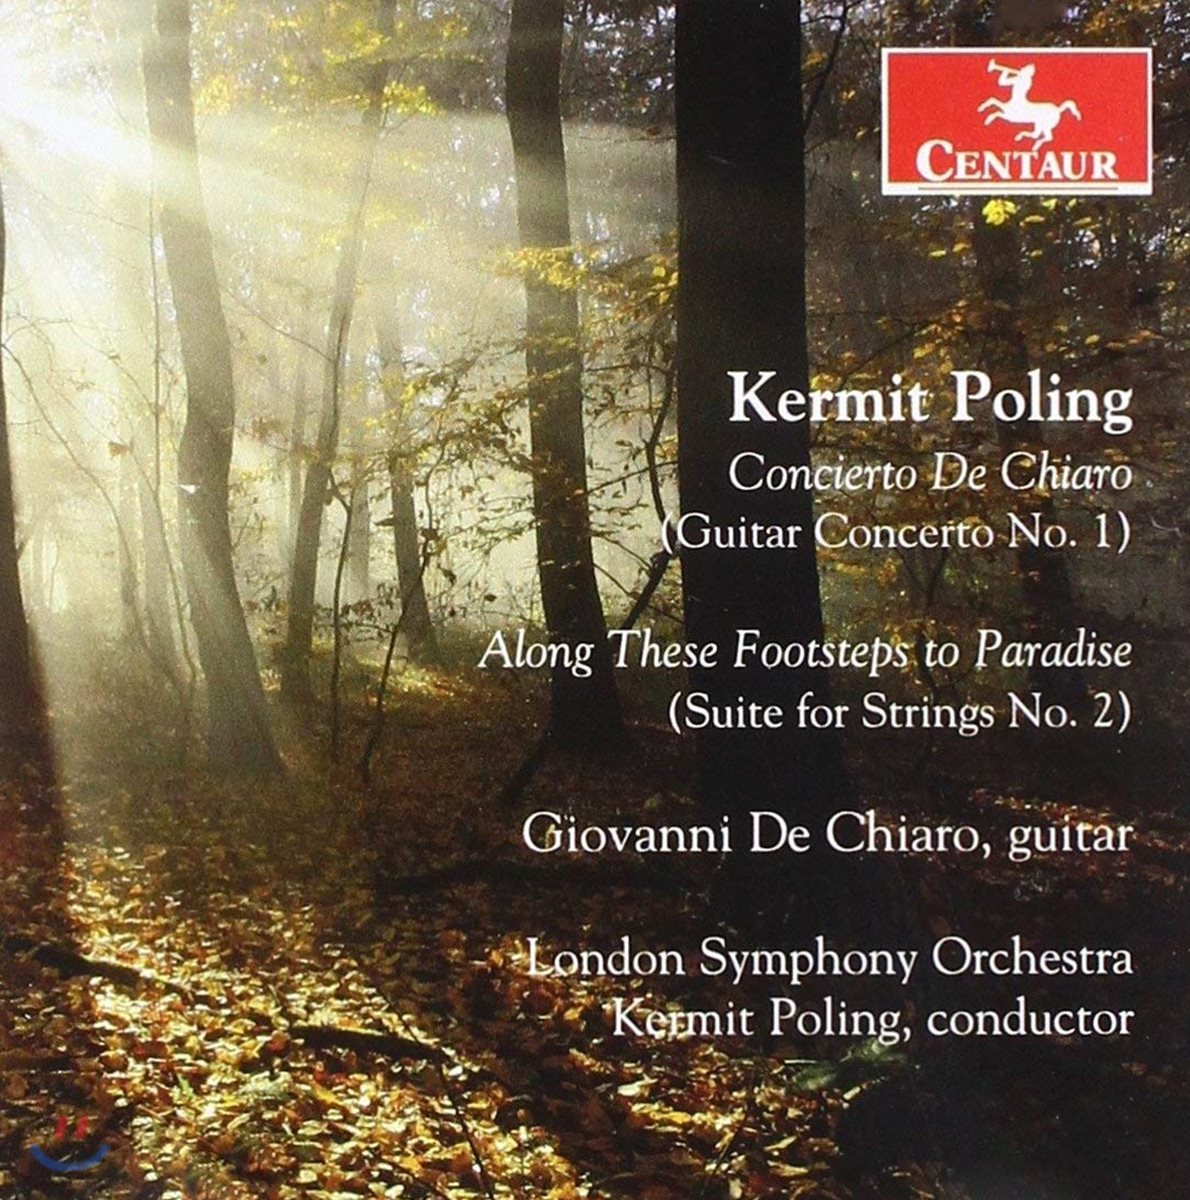 Giovanni De Chiaro 커미트 폴링: 기타 협주곡 1번, 현을 위한 모음곡 2번 '천국으로 가는 길을 따라' (Kermit Poling: Guitar Concerto No.1, 'Along These Footsteps to Paradise')